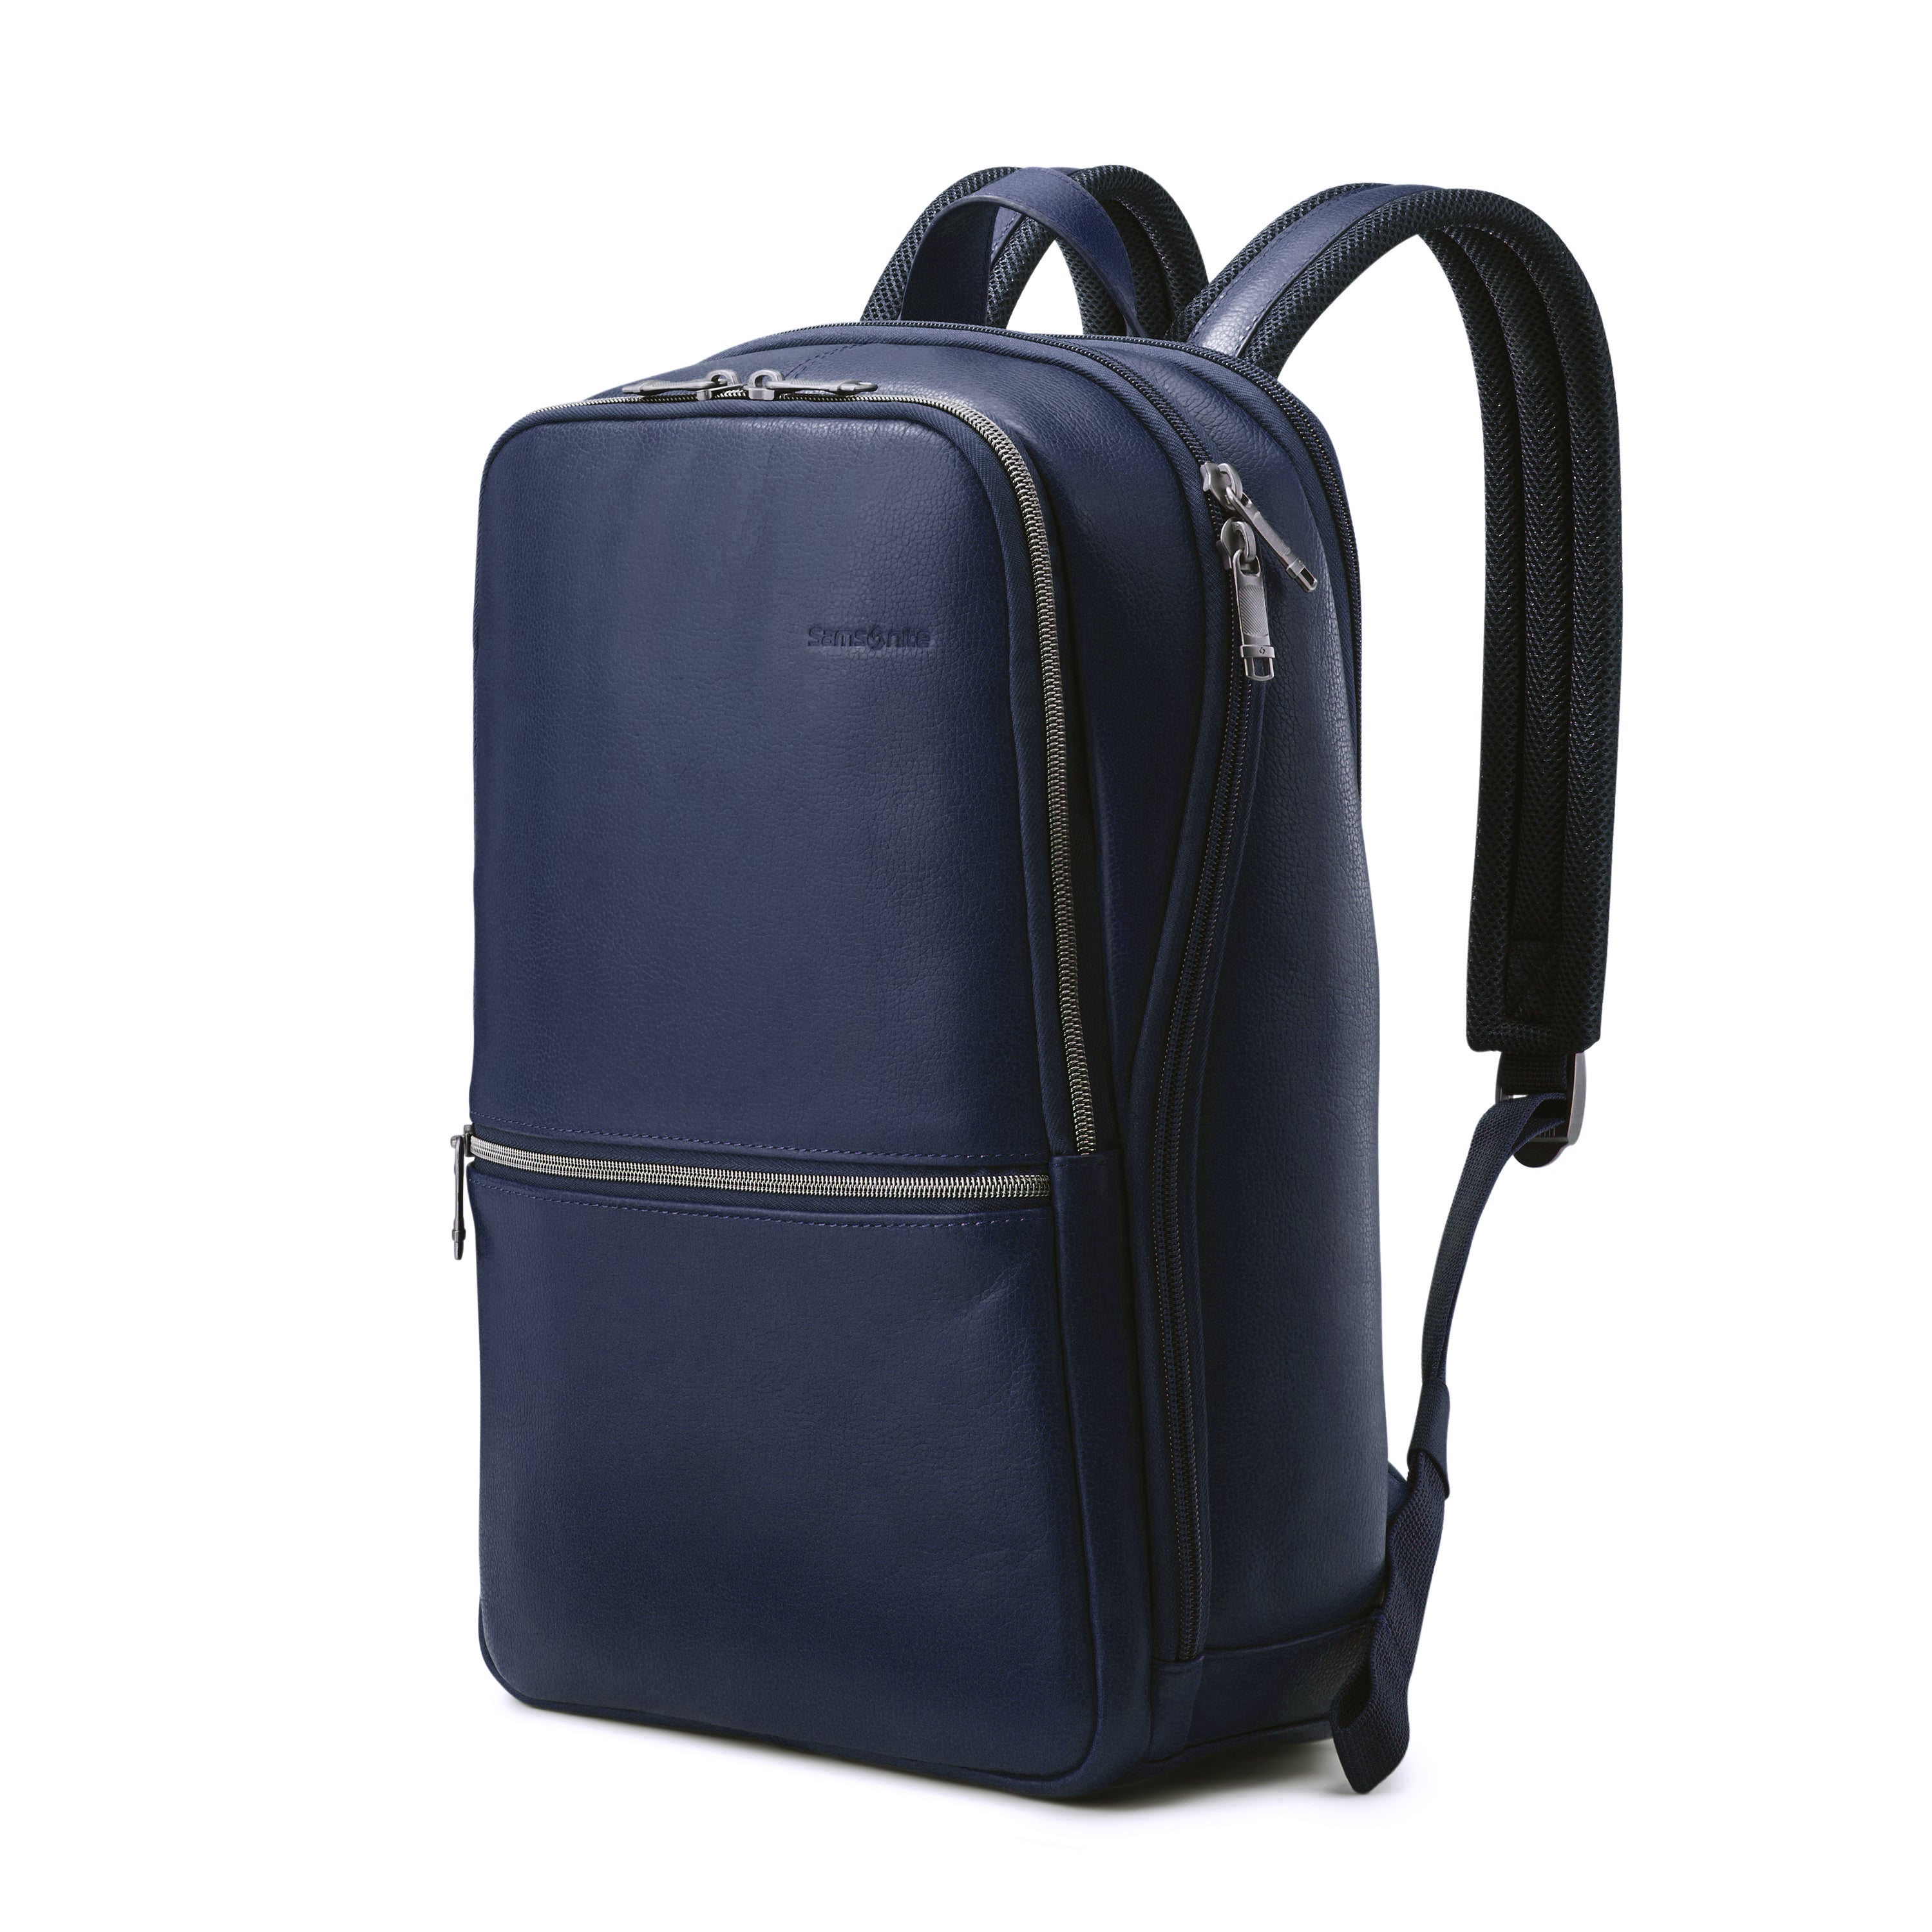 Samsonite Classic Leather 126036 Slim Backpack - Navy